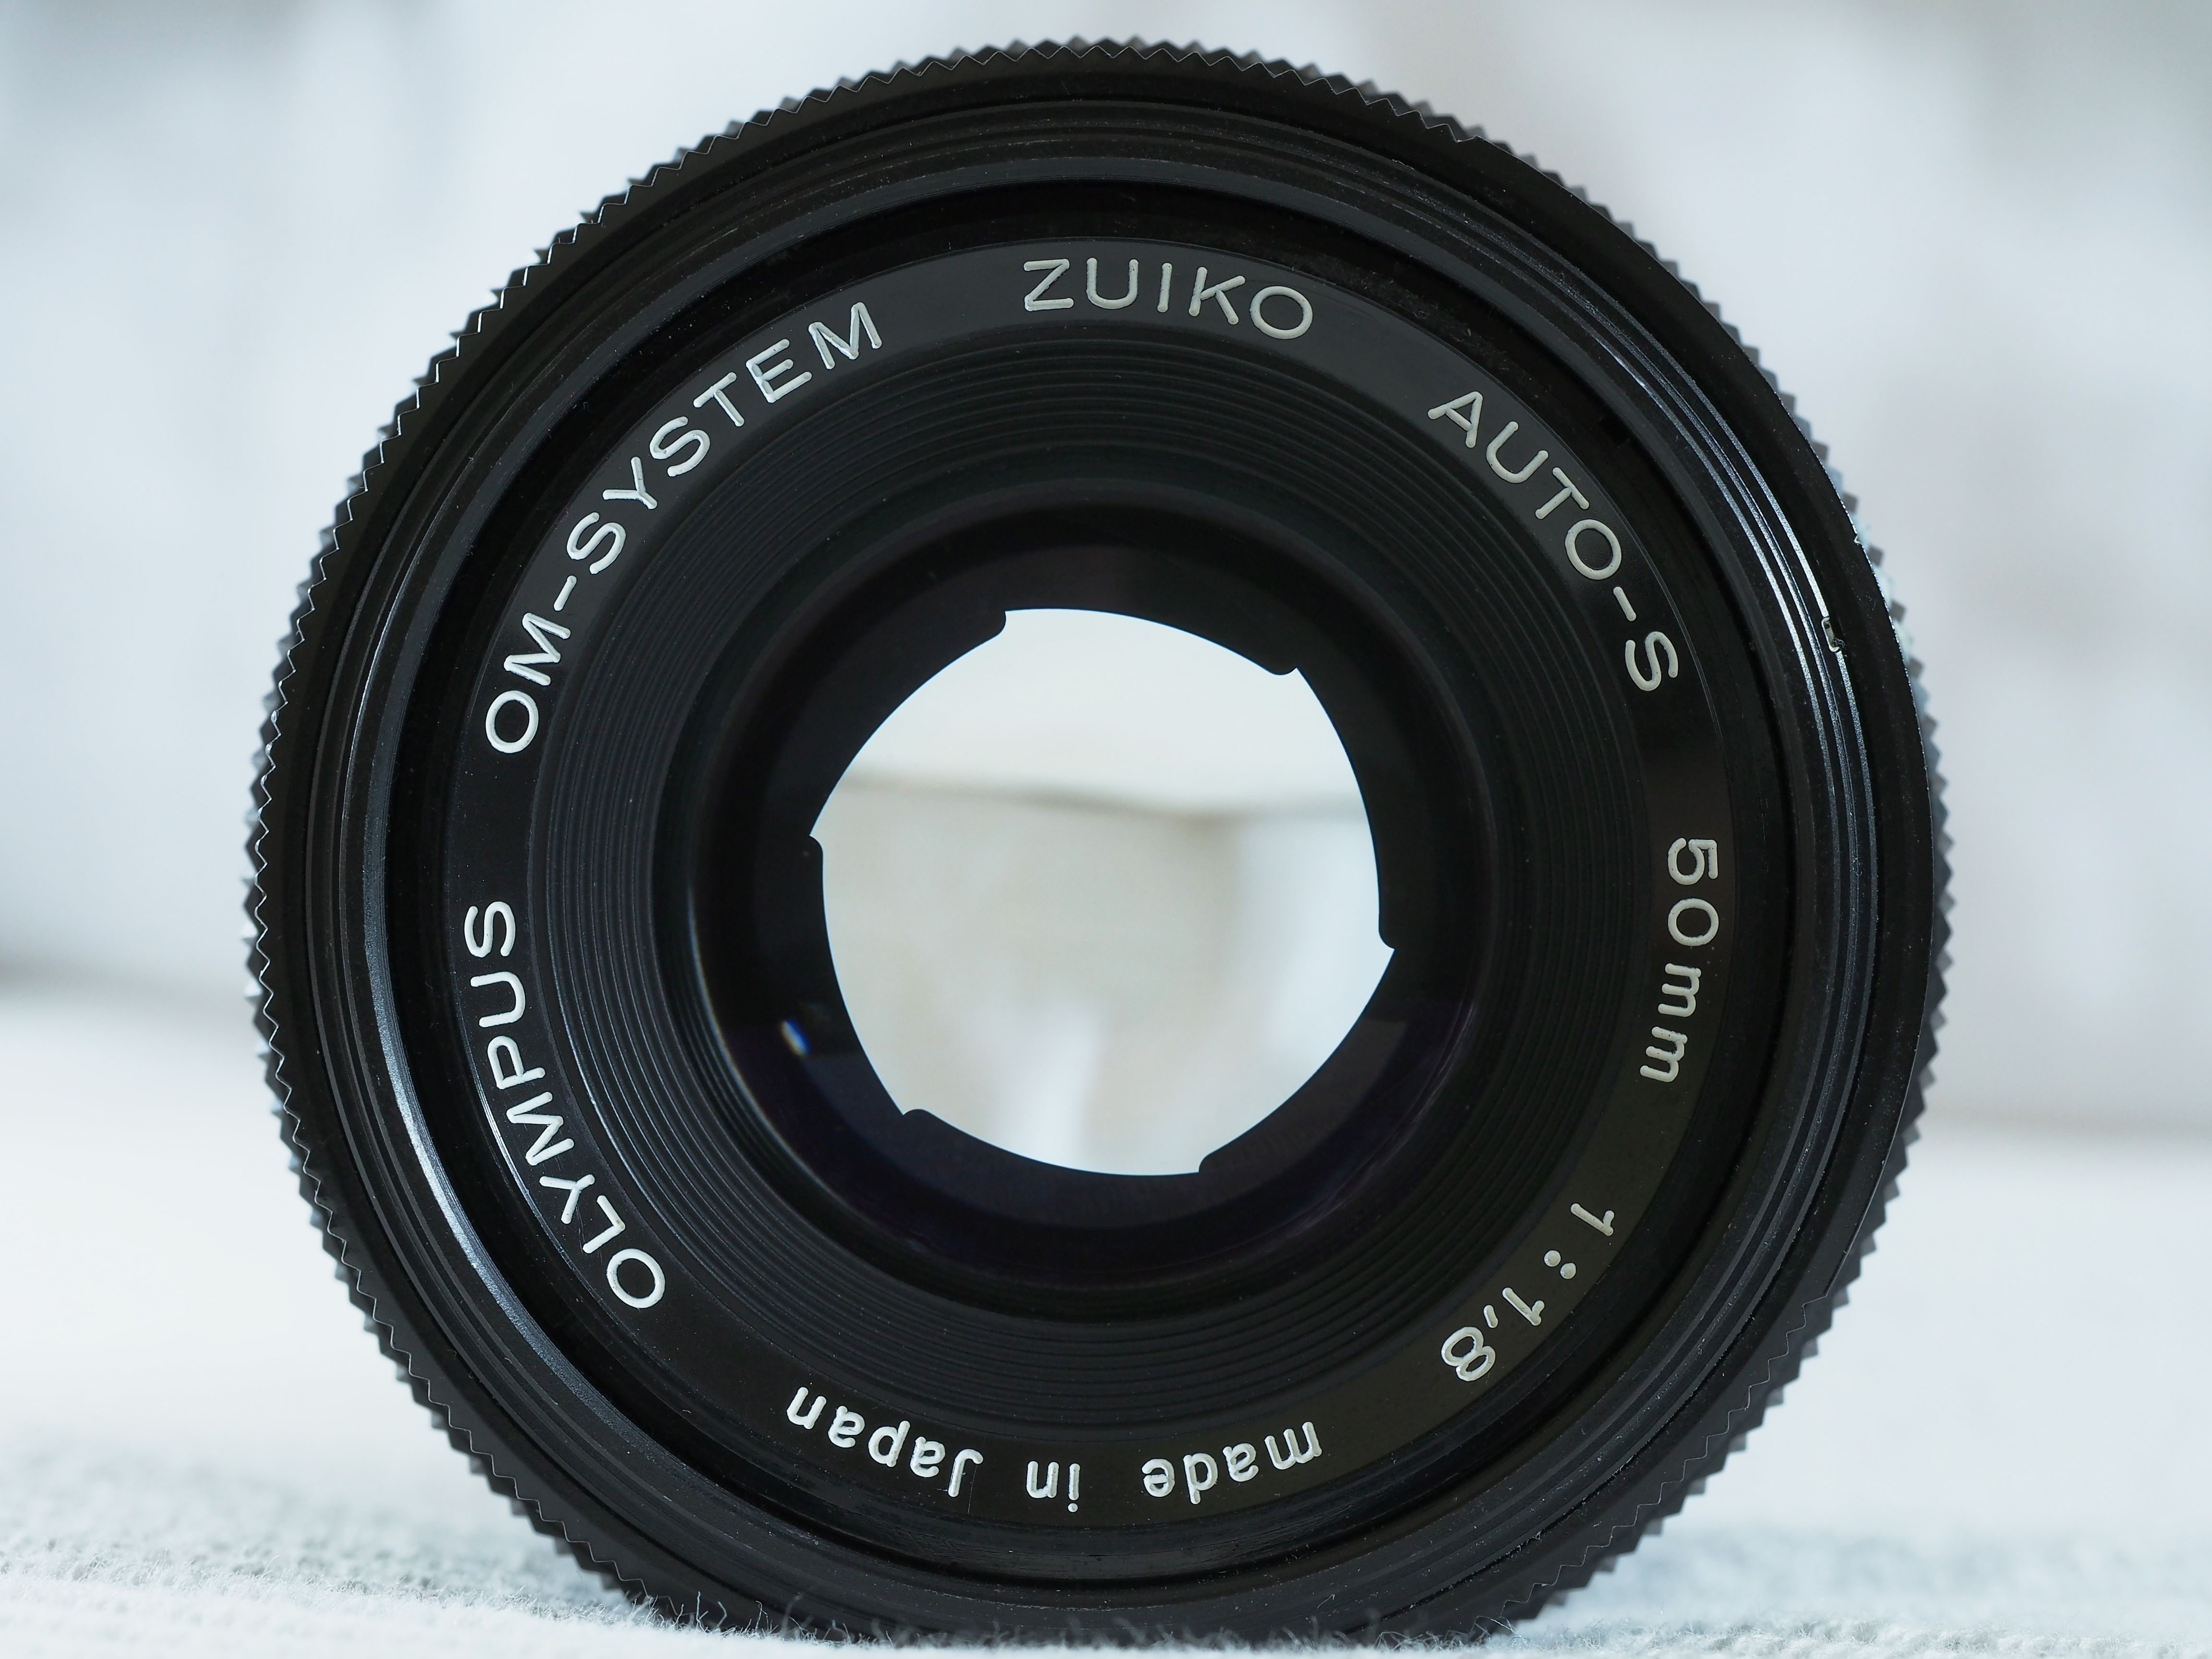 Olympus Zuiko OM 50 mm lens